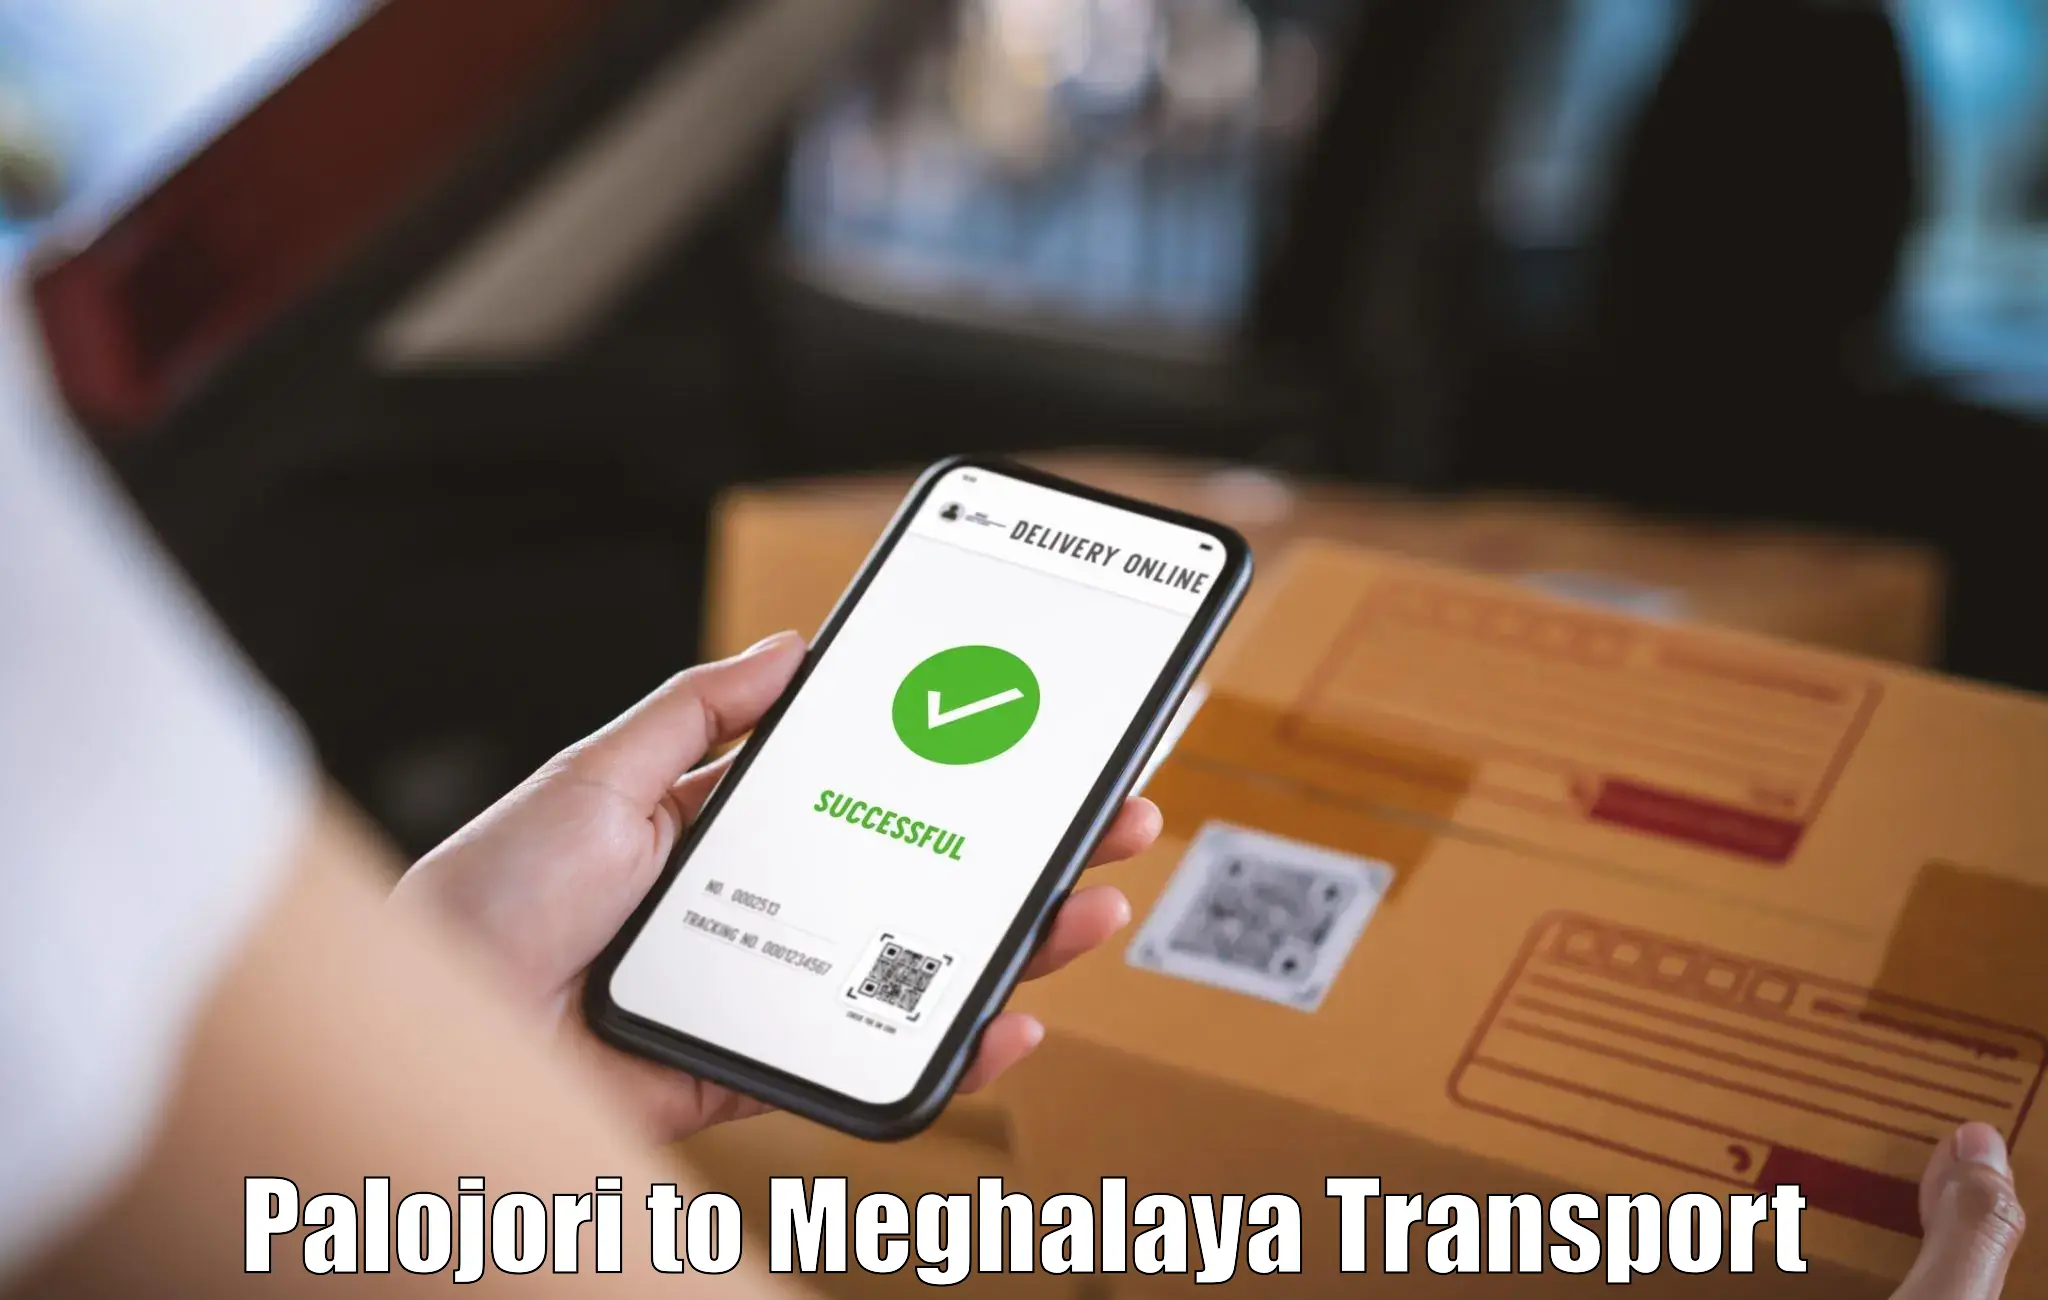 Air freight transport services in Palojori to Meghalaya